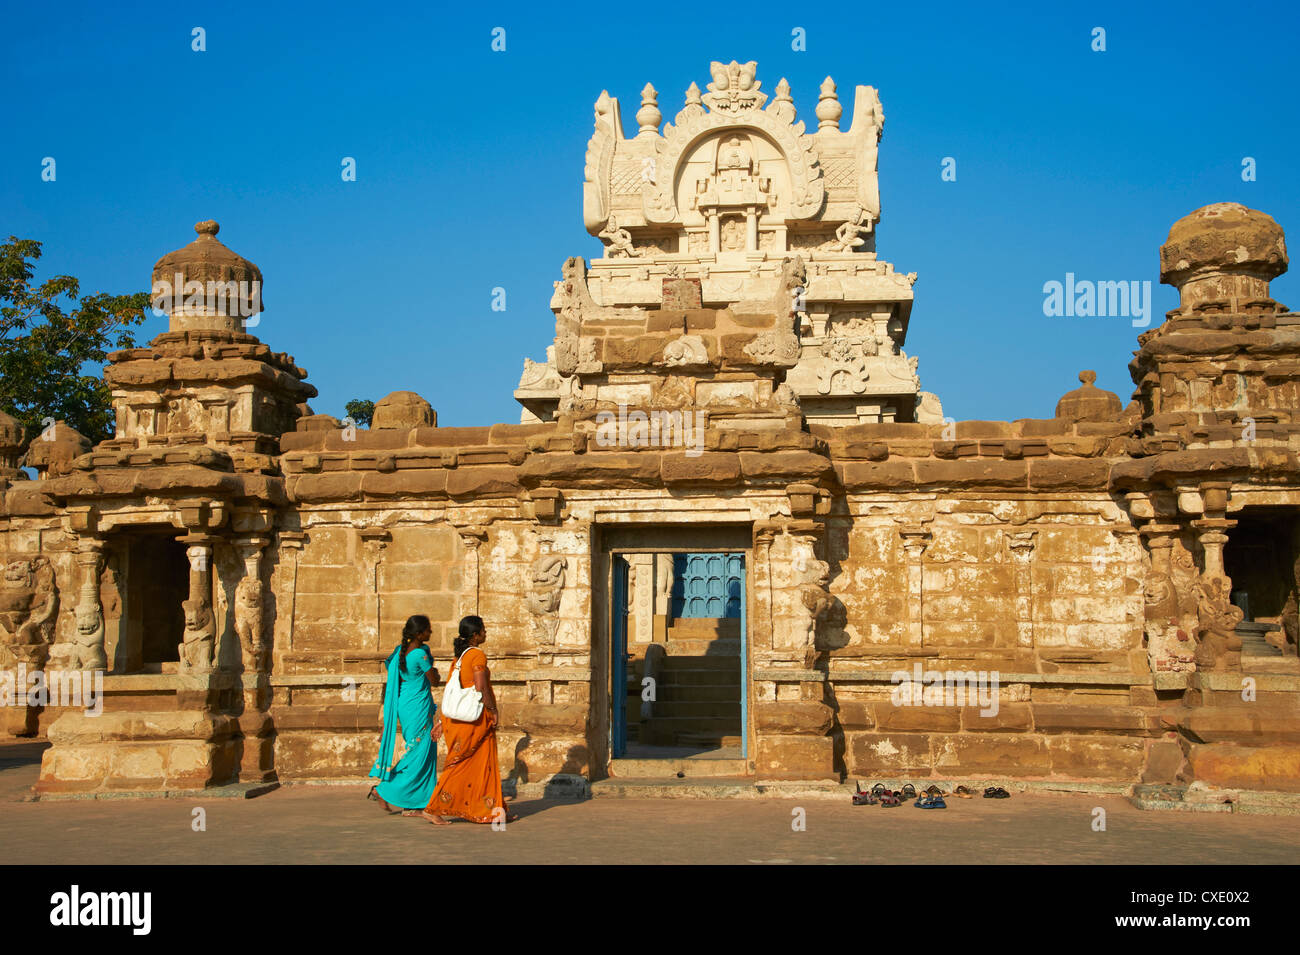 Kailasanatha temple dating from 8th century, Kanchipuram, Tamil Nadu, India, Asia Stock Photo